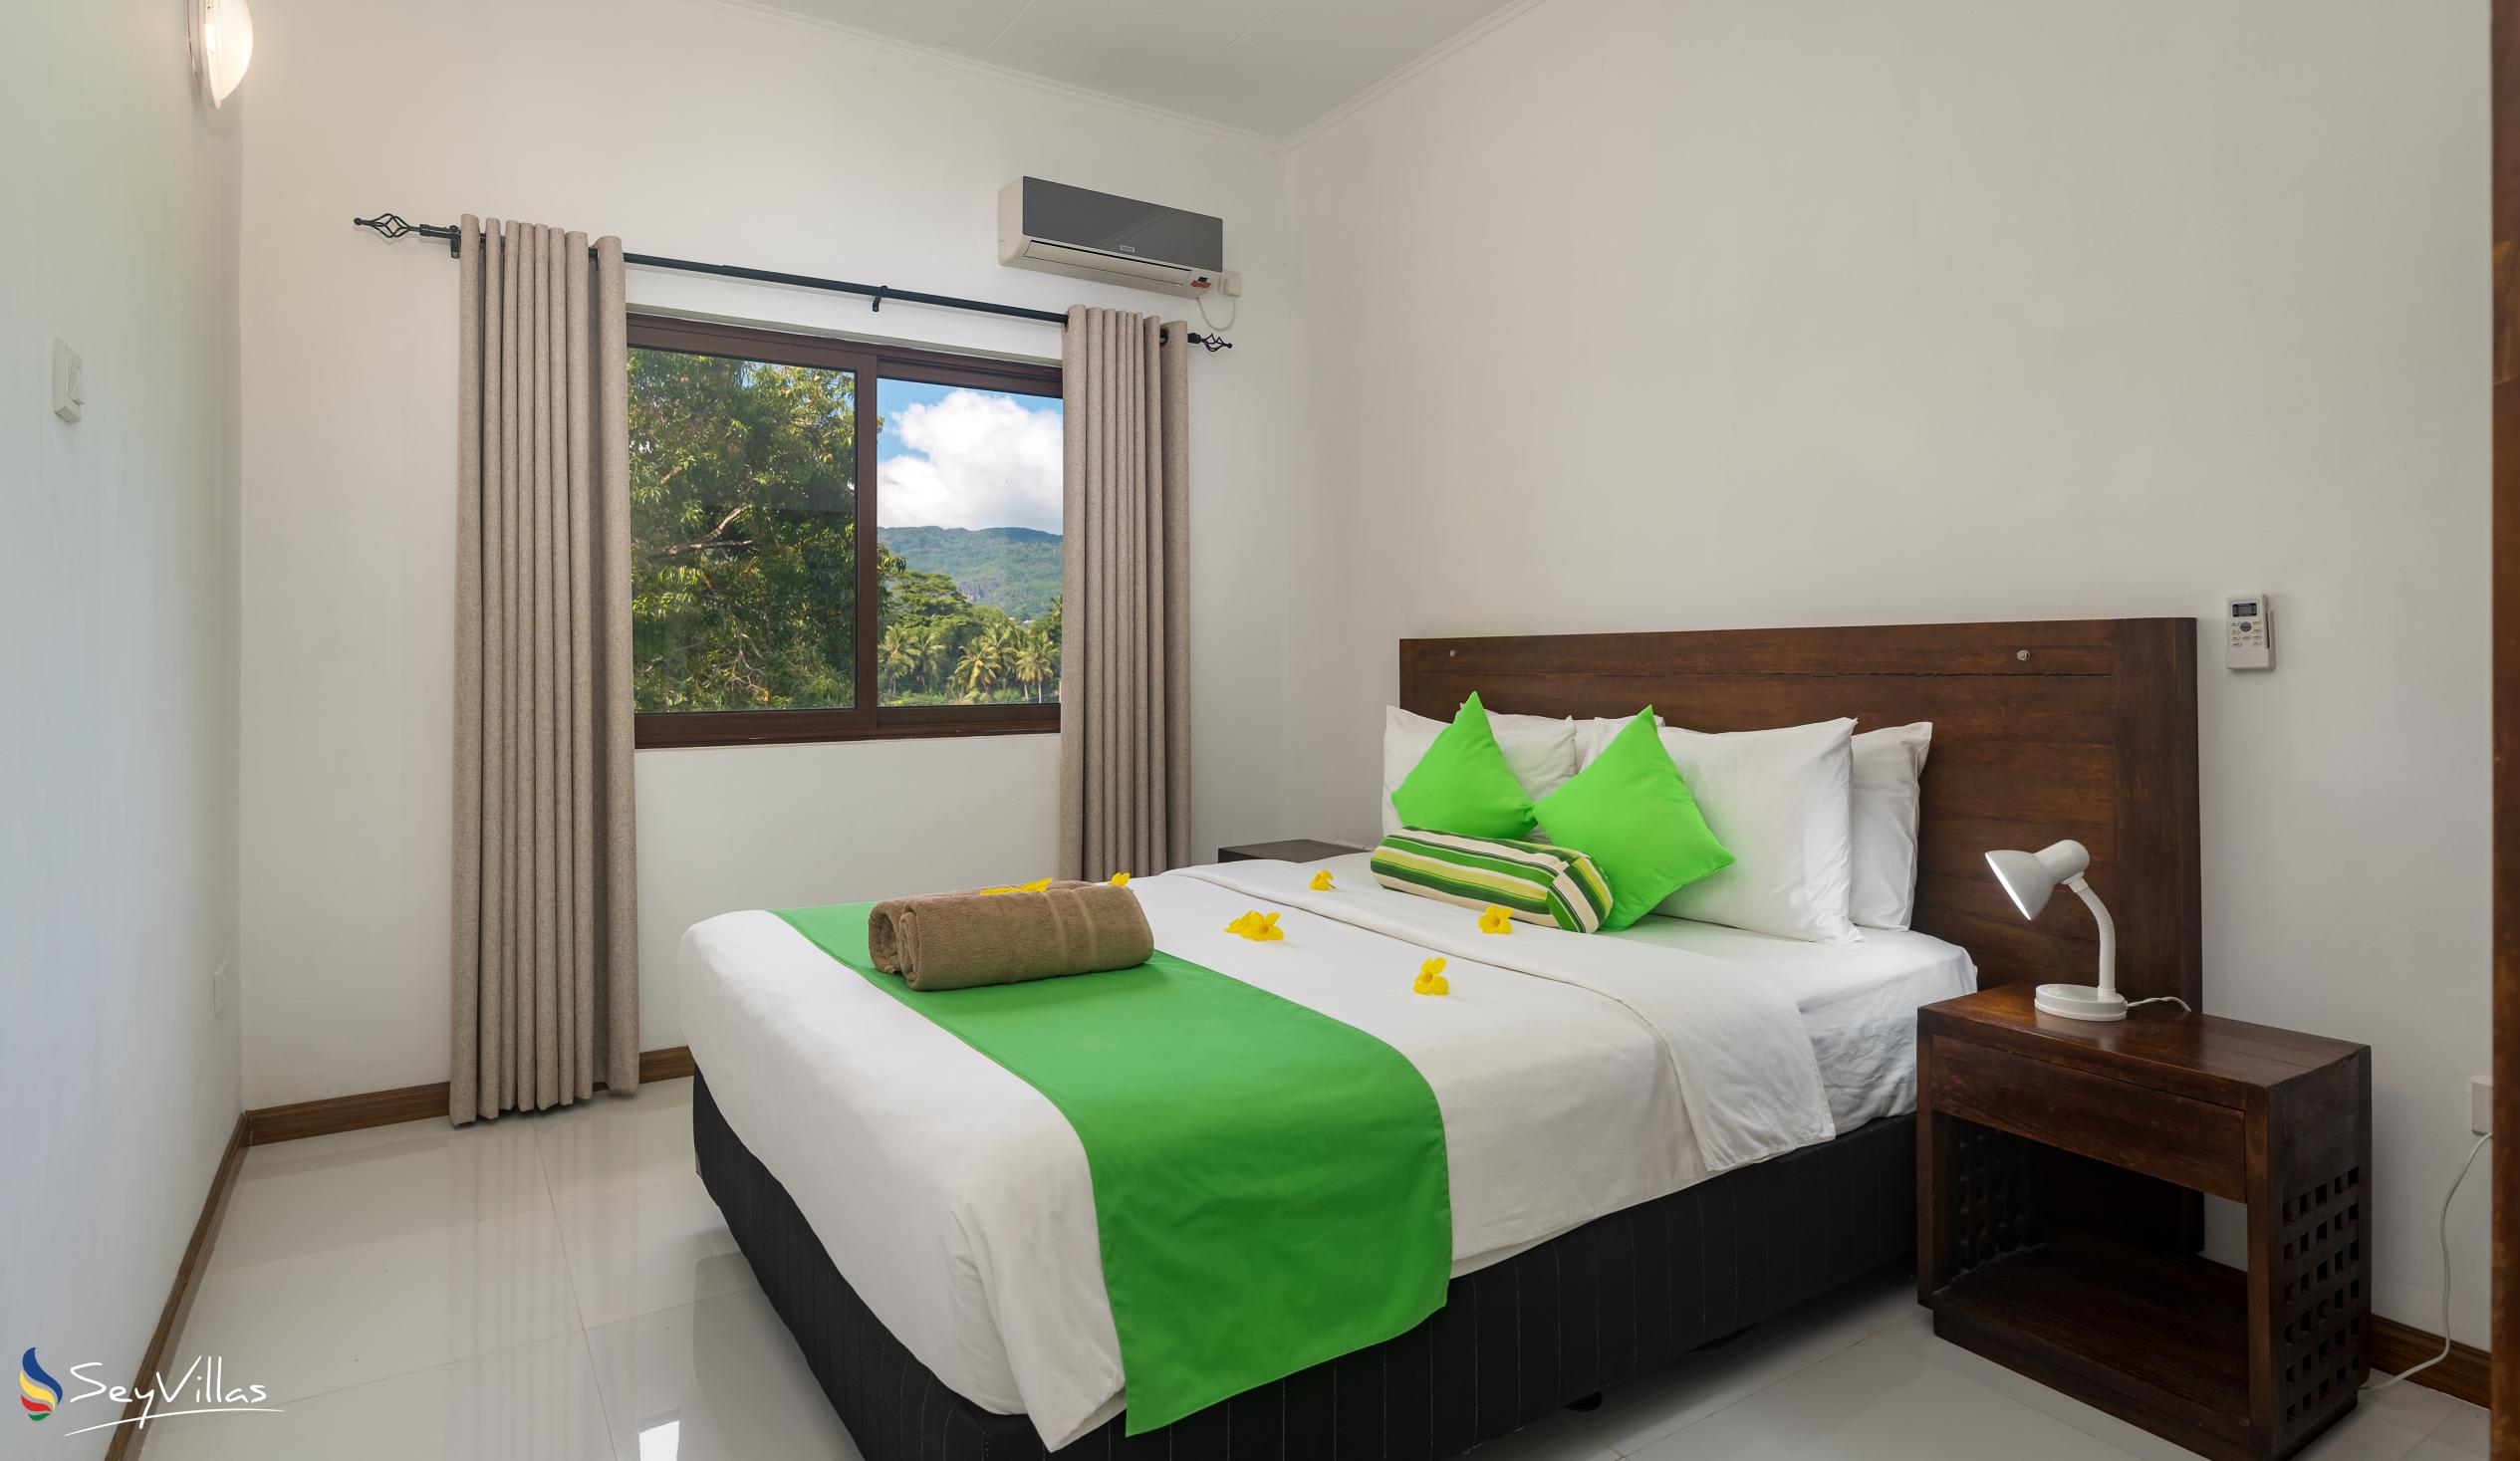 Foto 105: Kanasuk Self Catering Apartments - Appartement Cinnamon 2 chambres - Mahé (Seychelles)